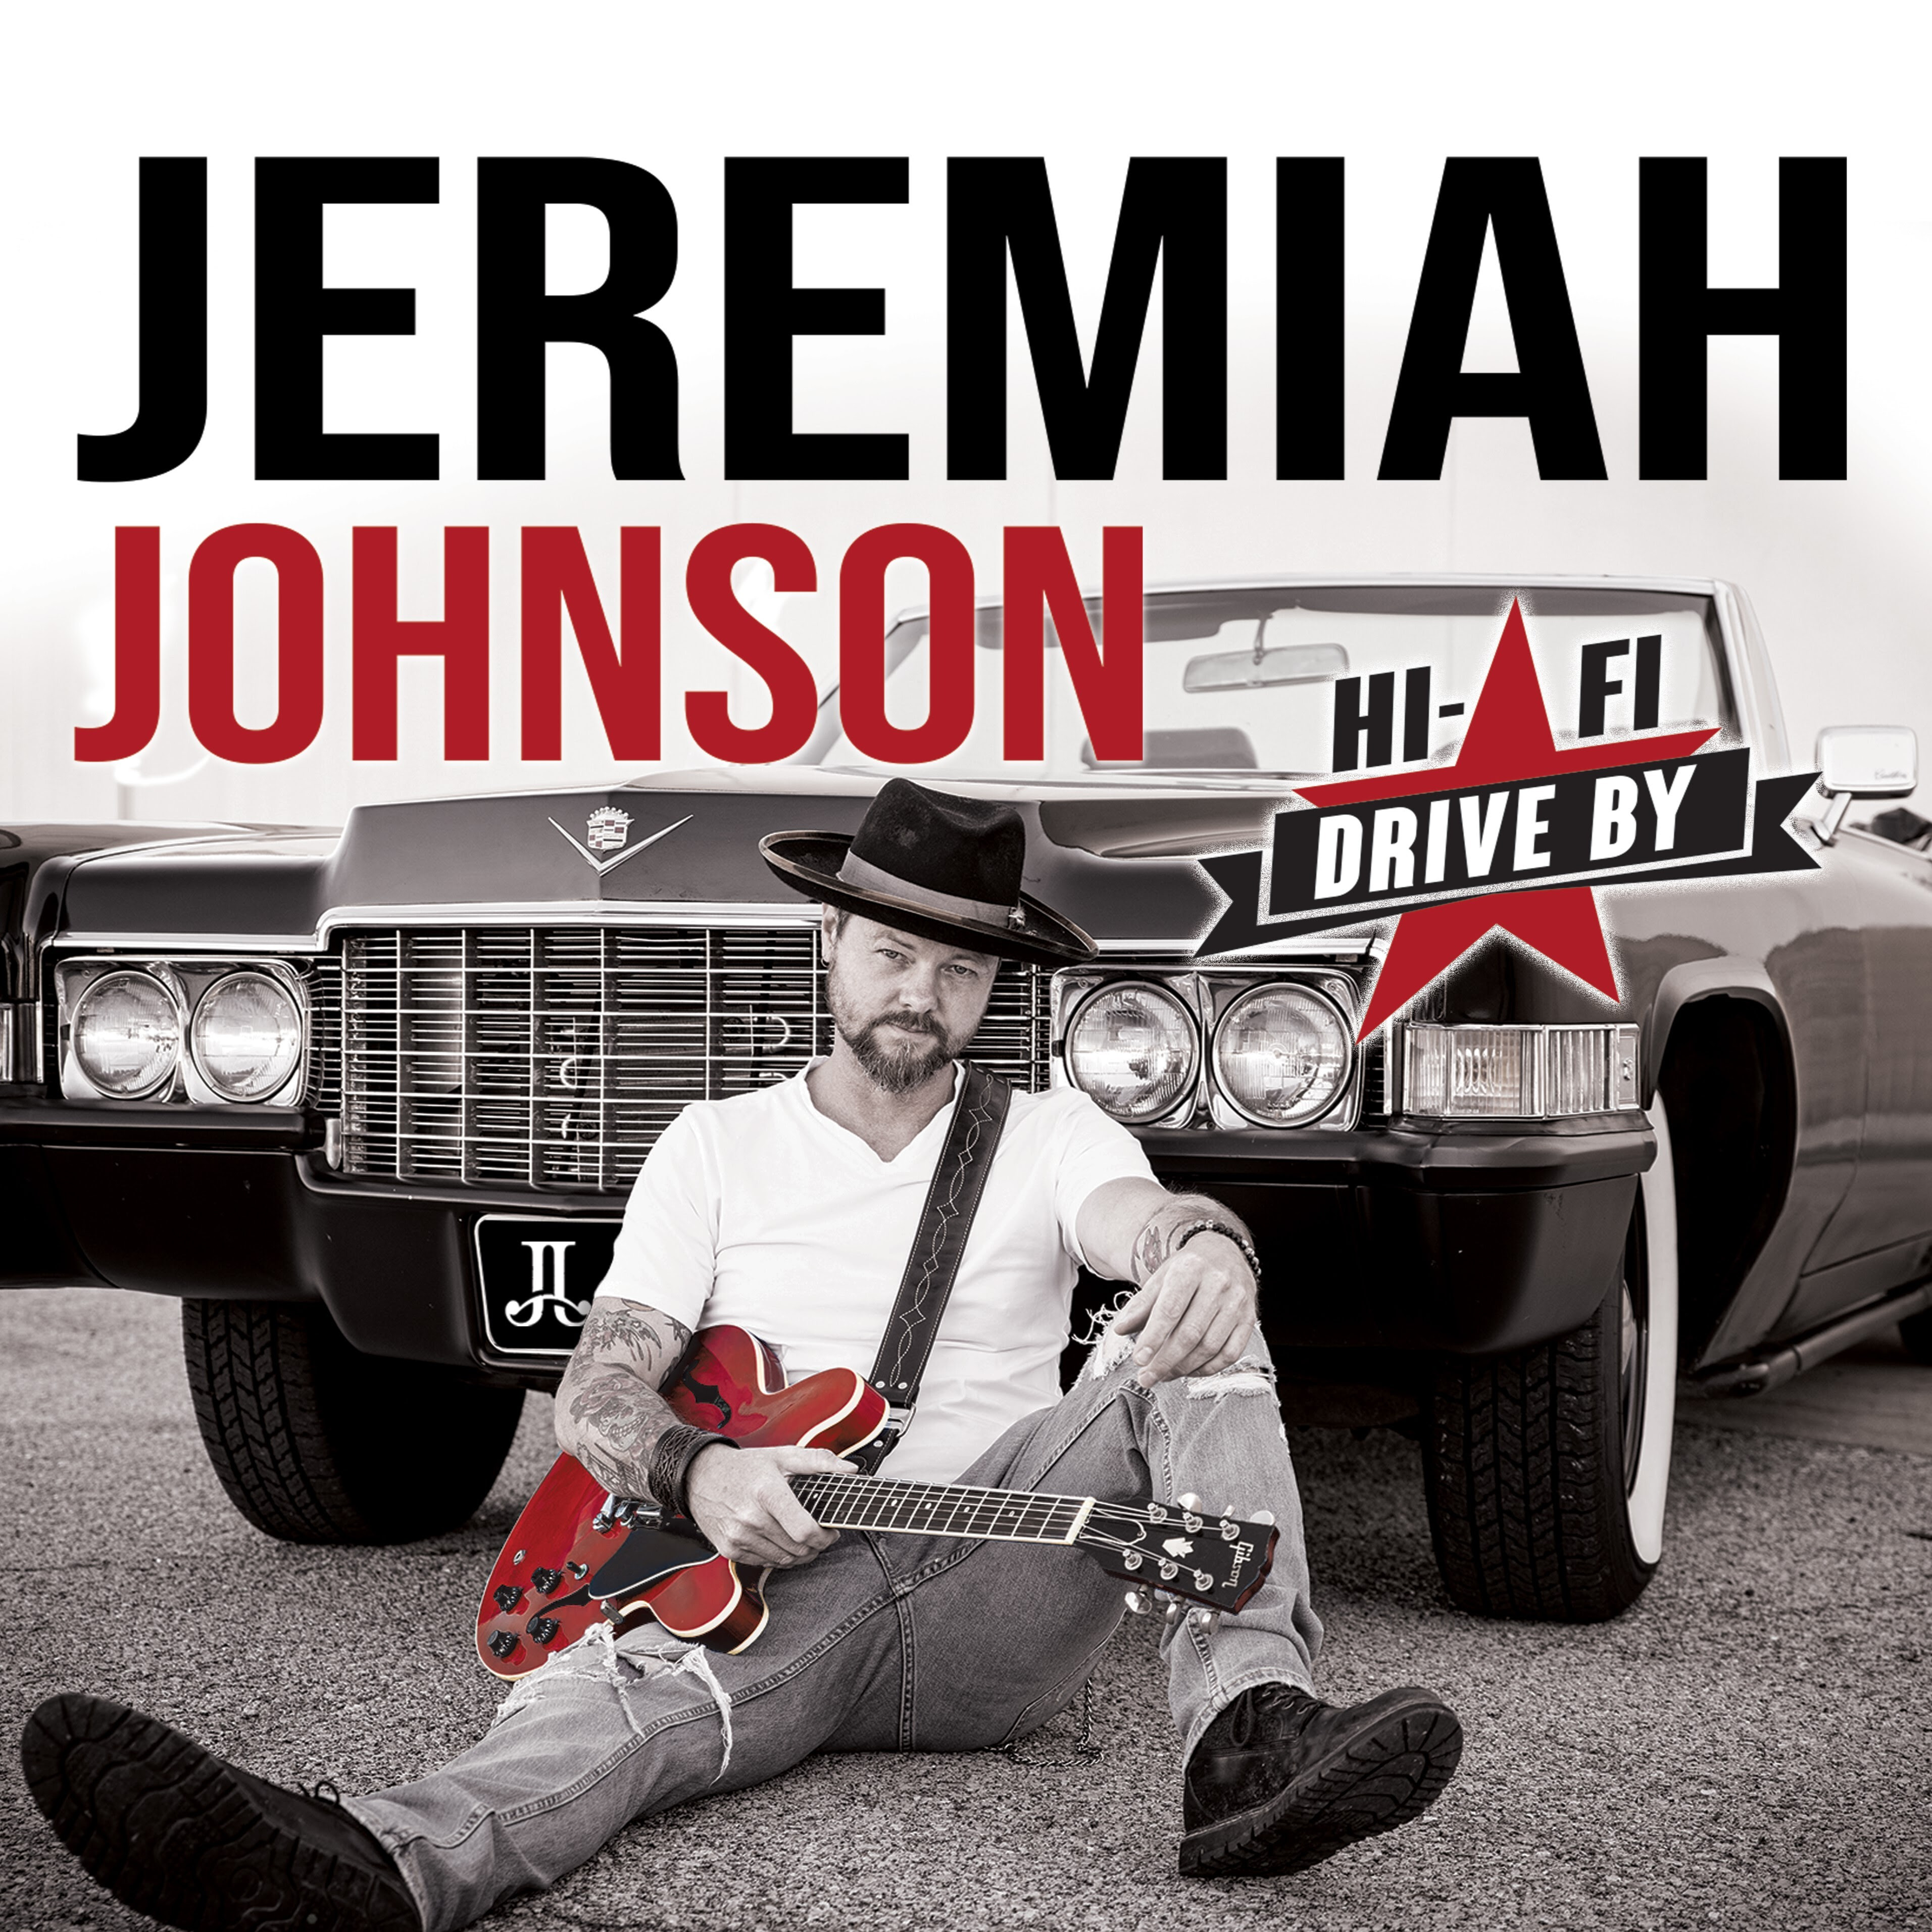 Bluesman Jeremiah Johnston to Release Hi-Fi Drive By Oct 21st